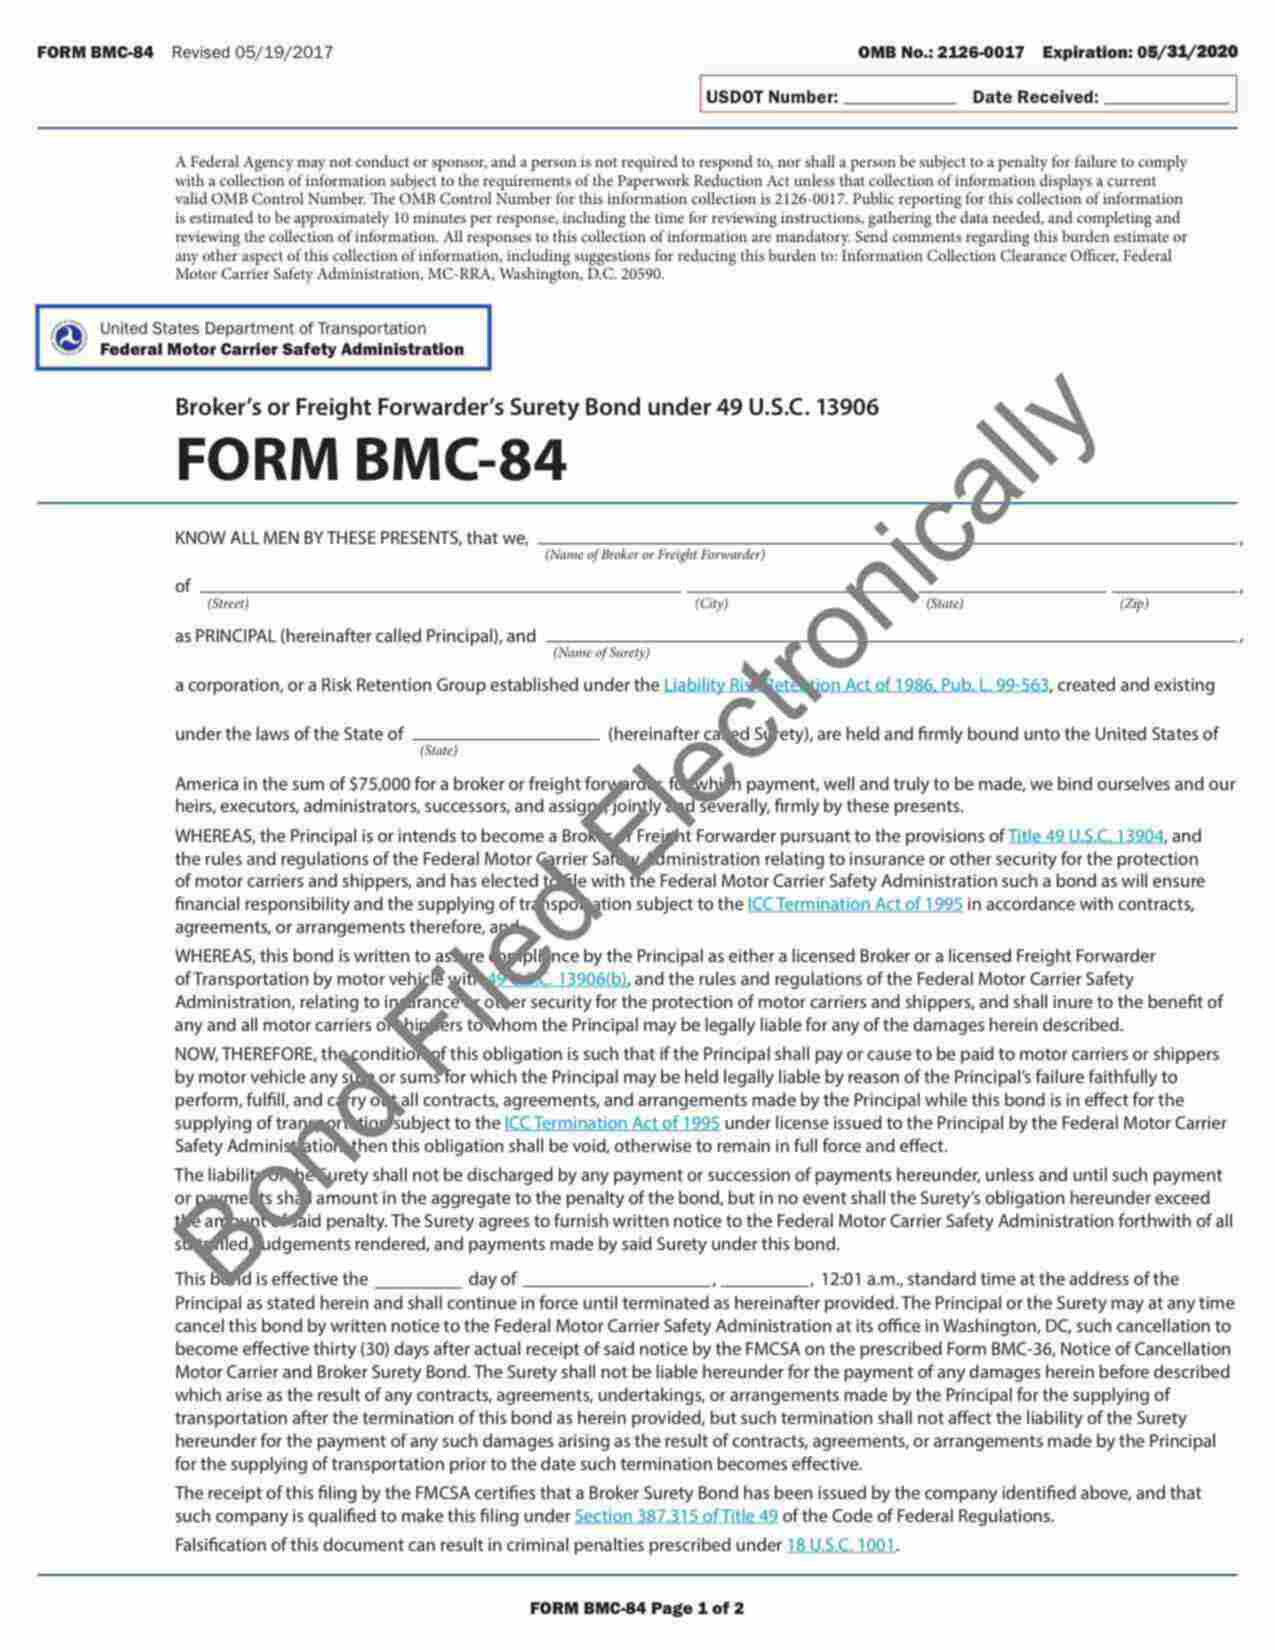 Arizona Property Broker or Freight Forwarder BMC-84 (ICC Broker) Bond Form